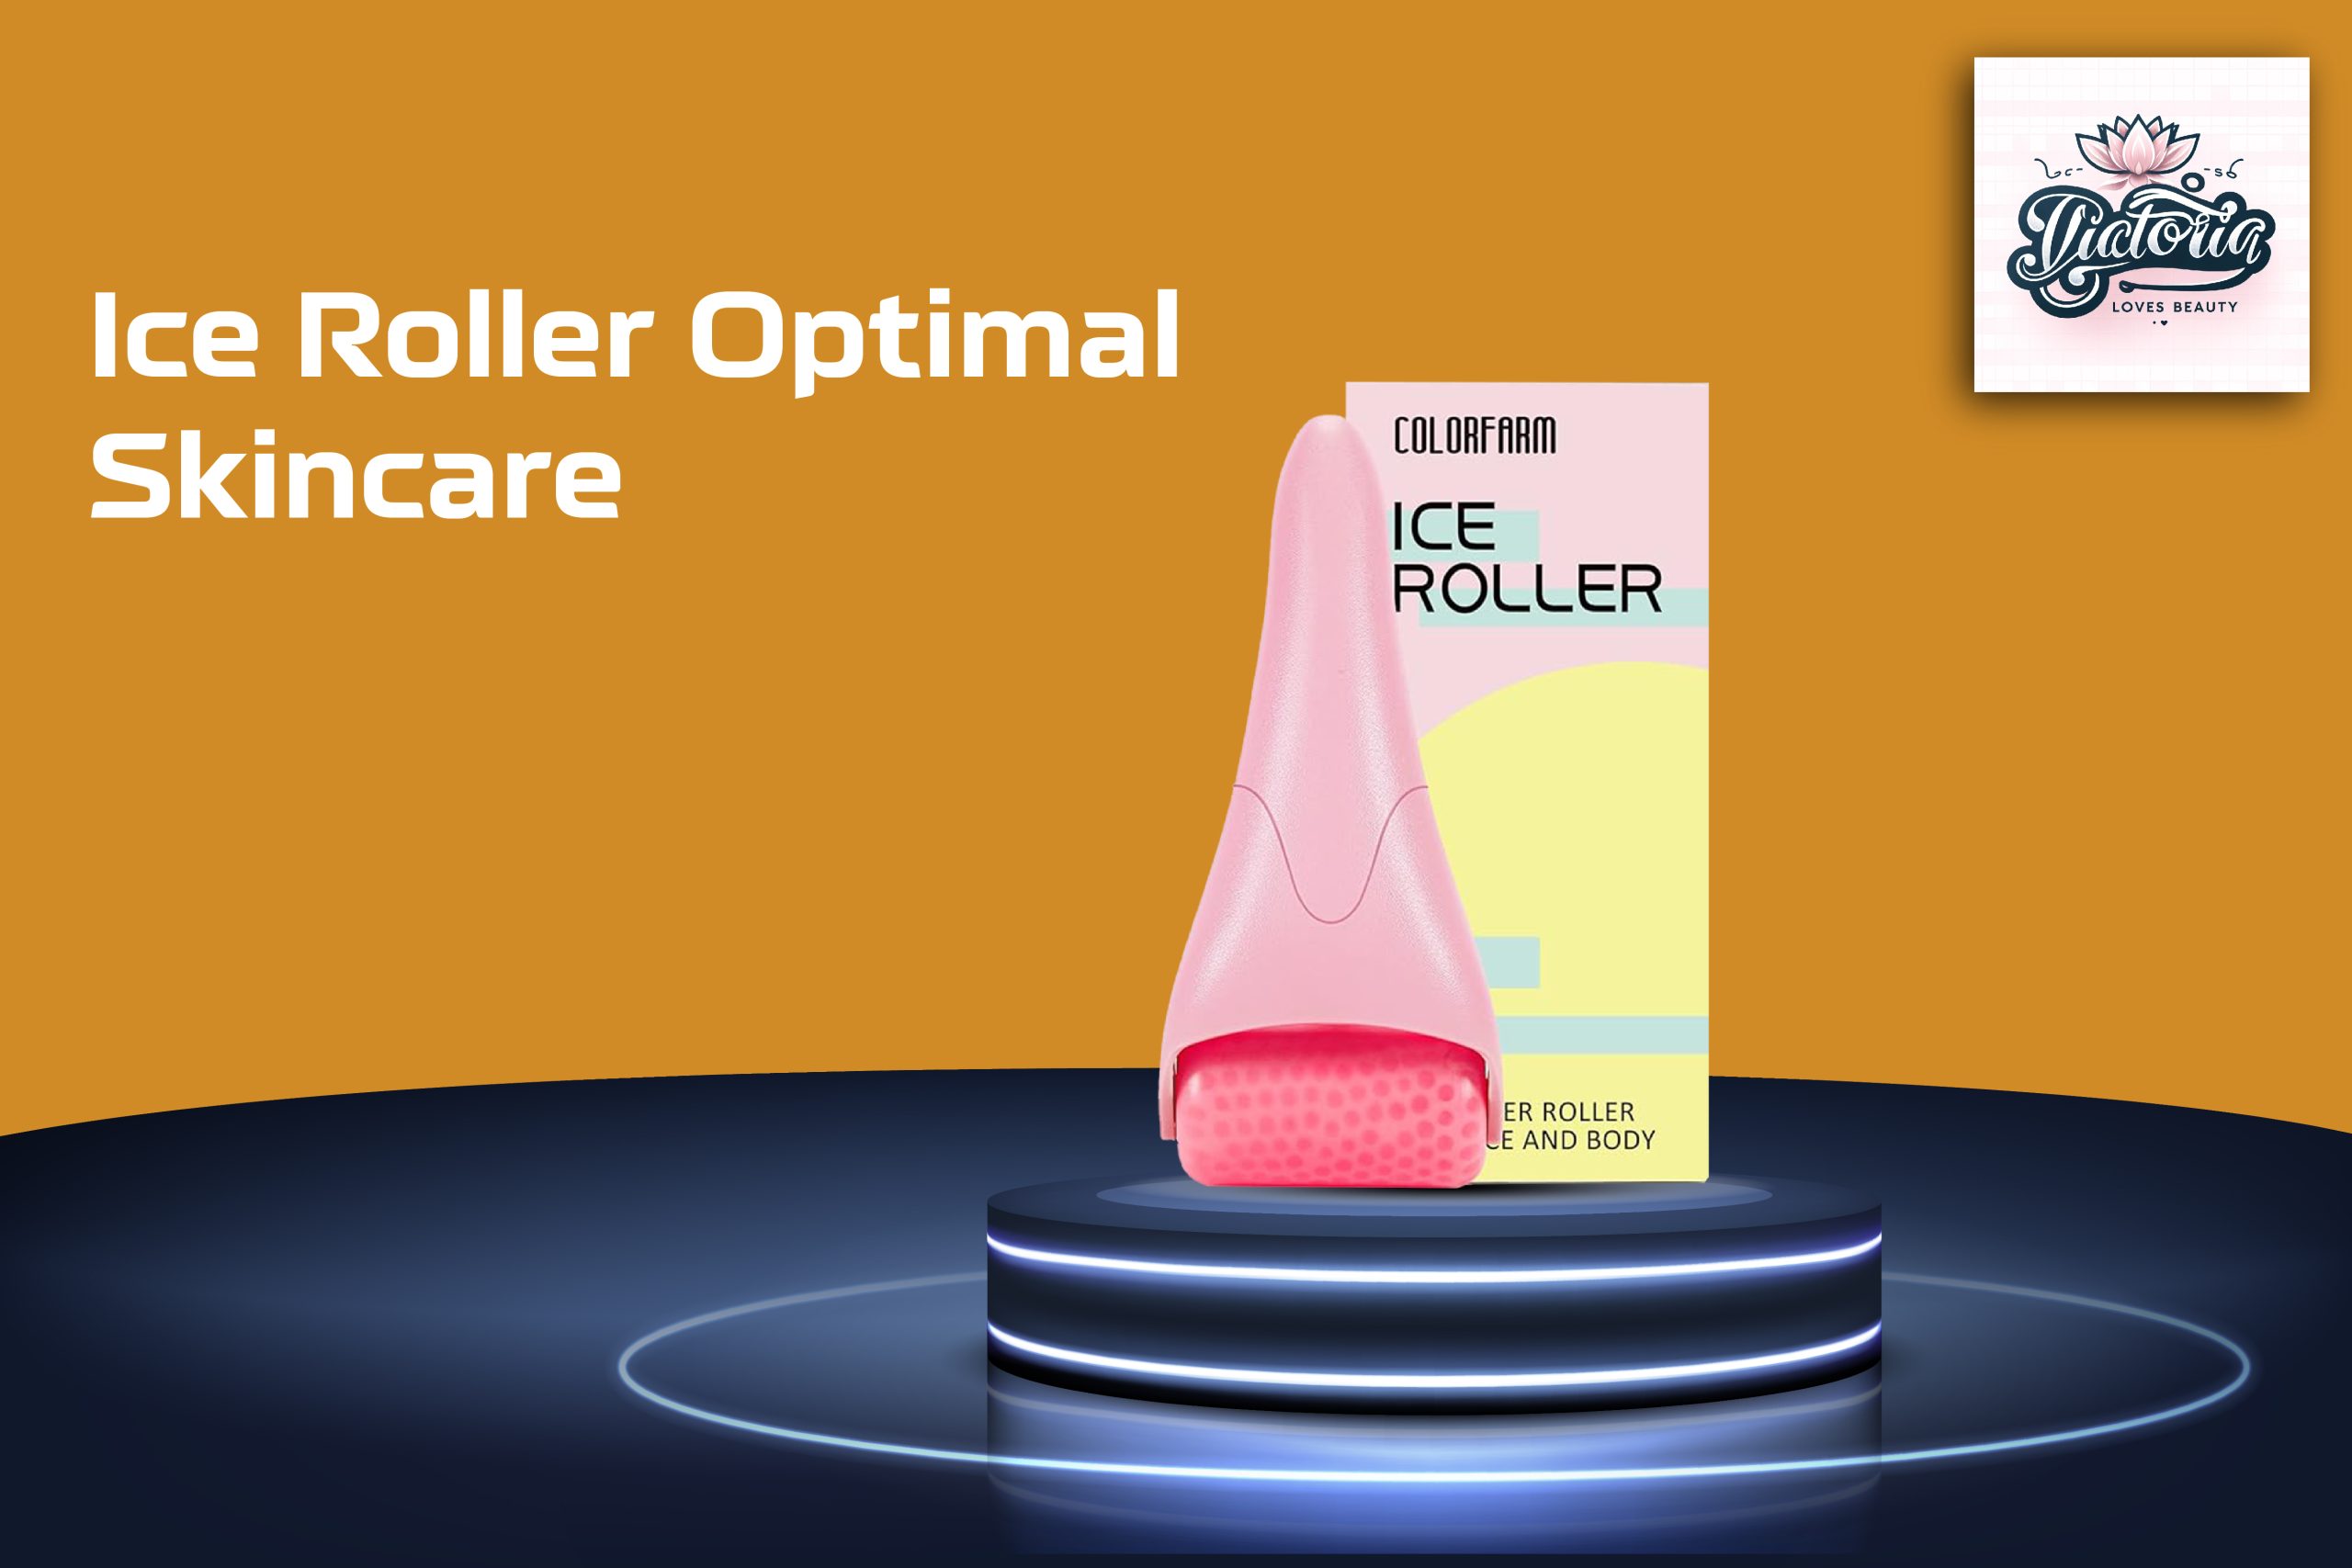 storing-ice-roller-optimal-skincare